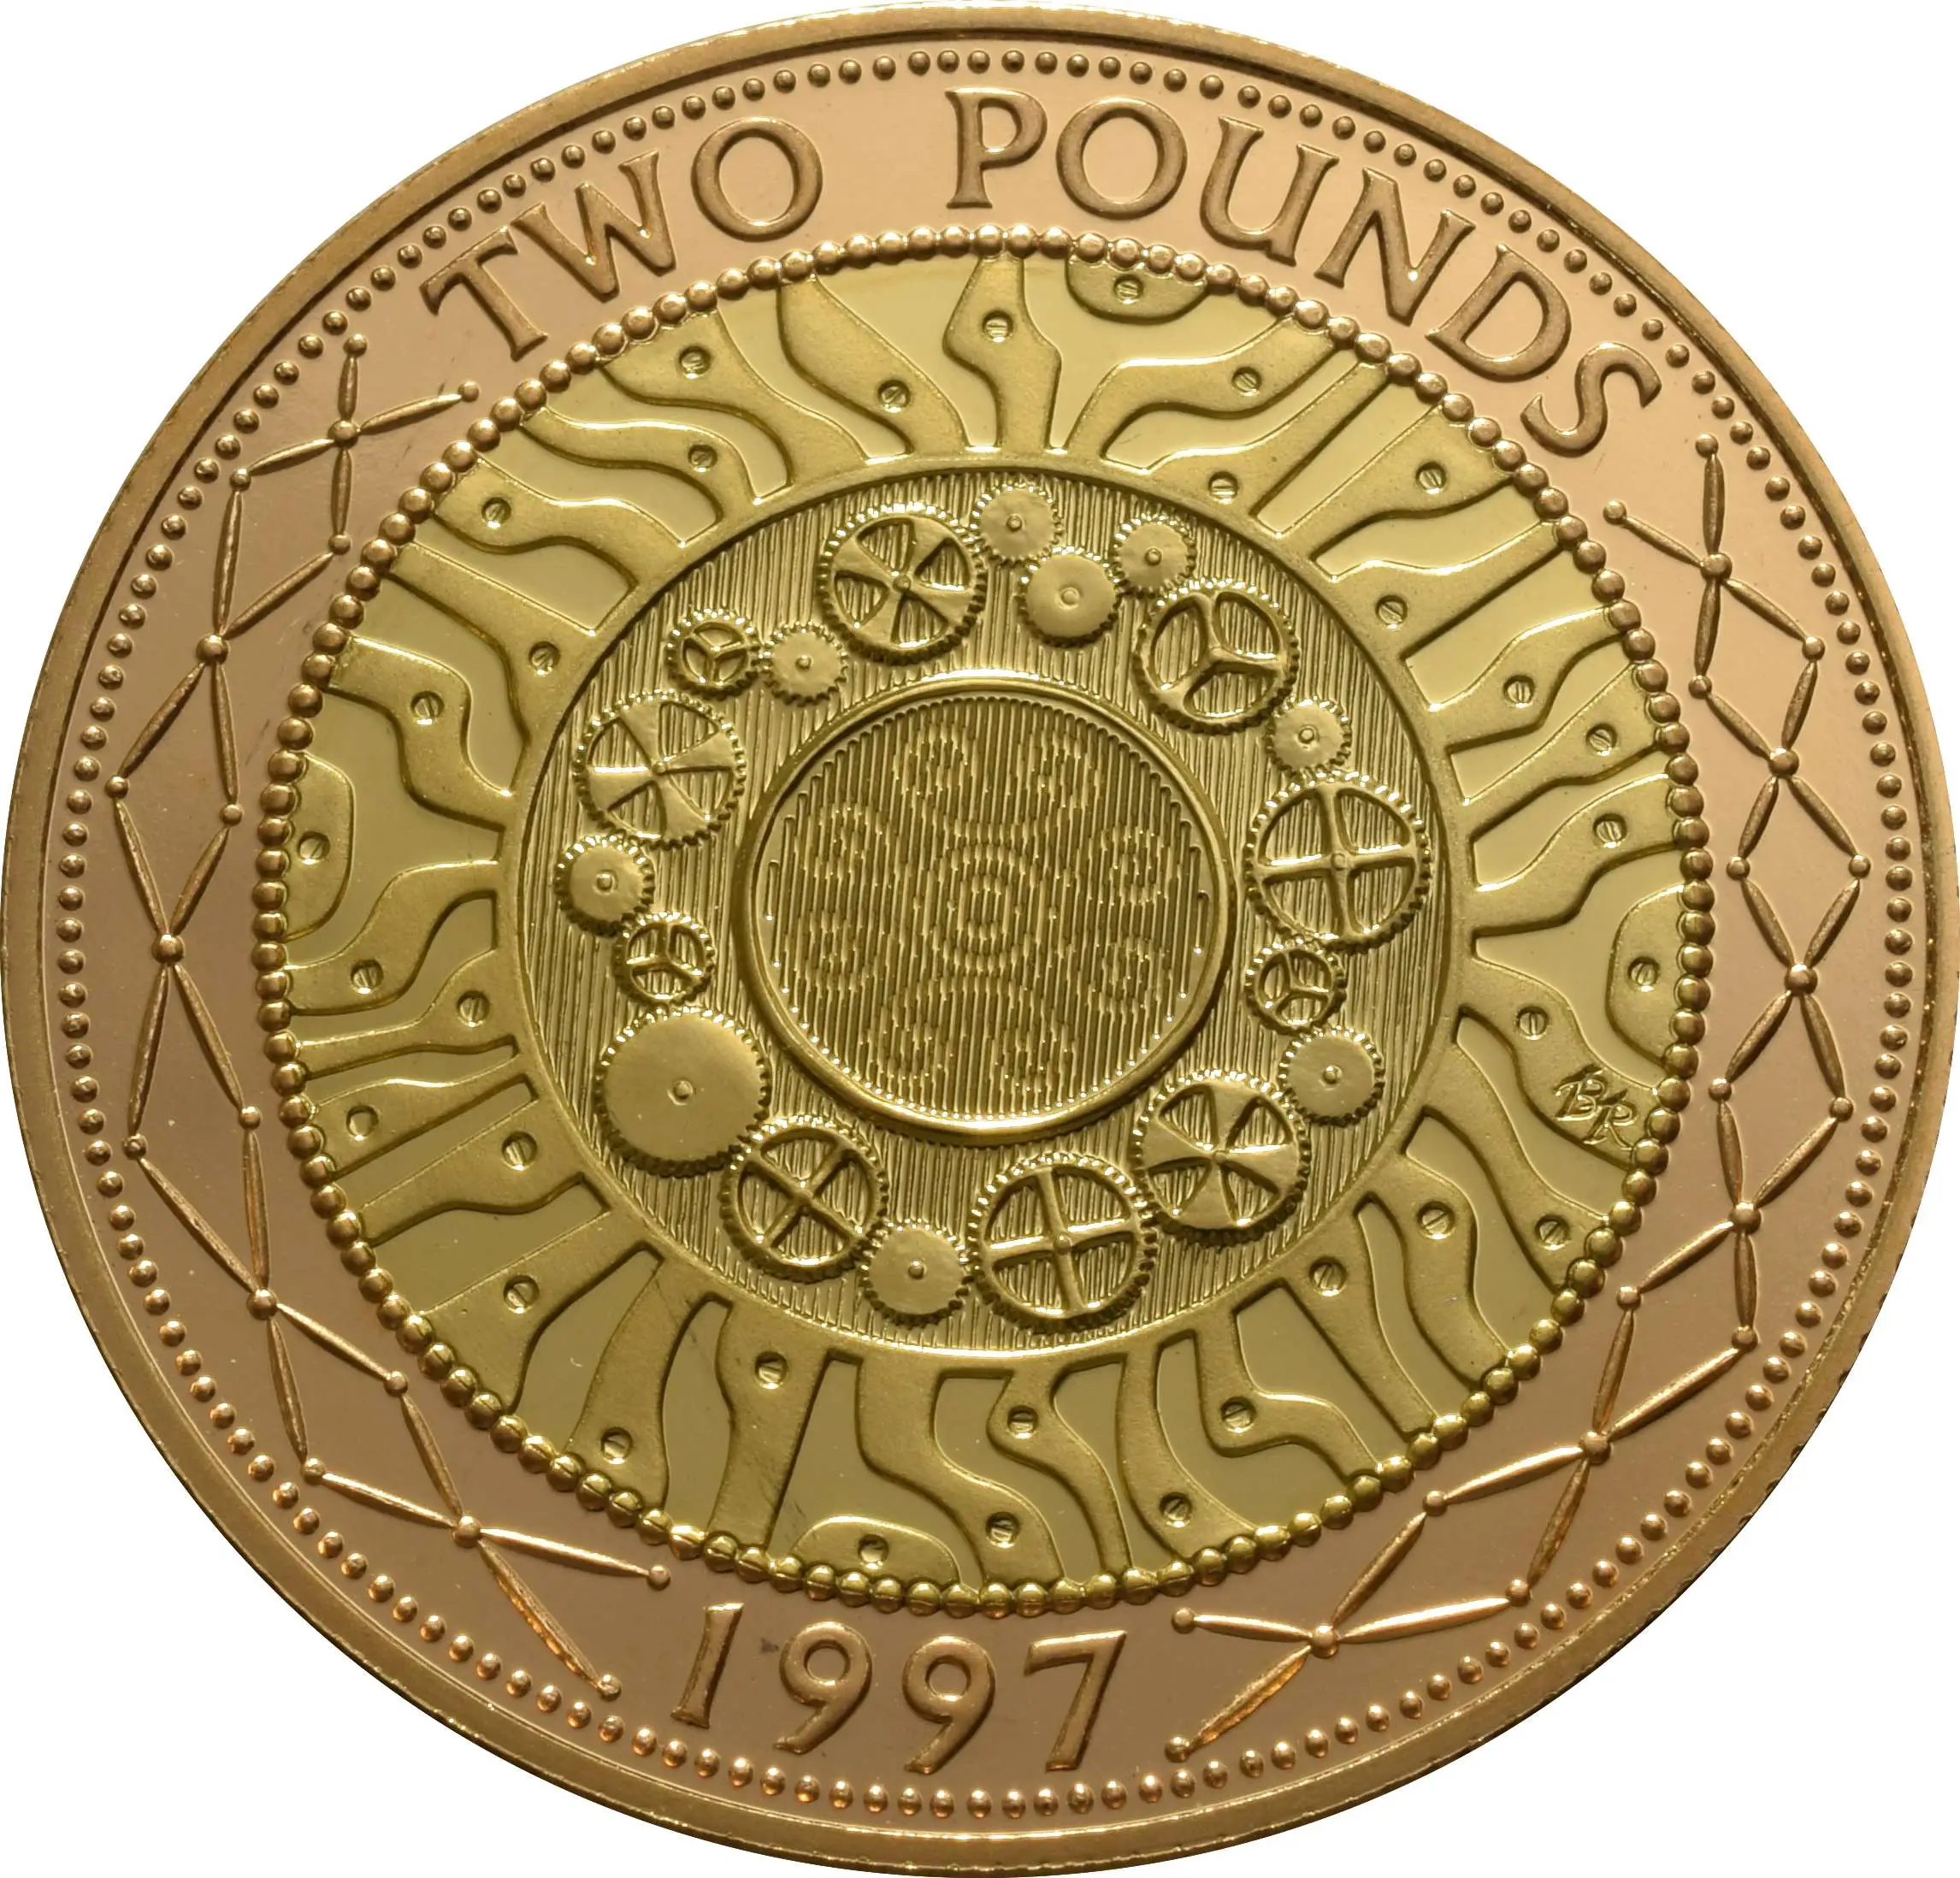 1997 Â£2 Gold Coin, Technologies